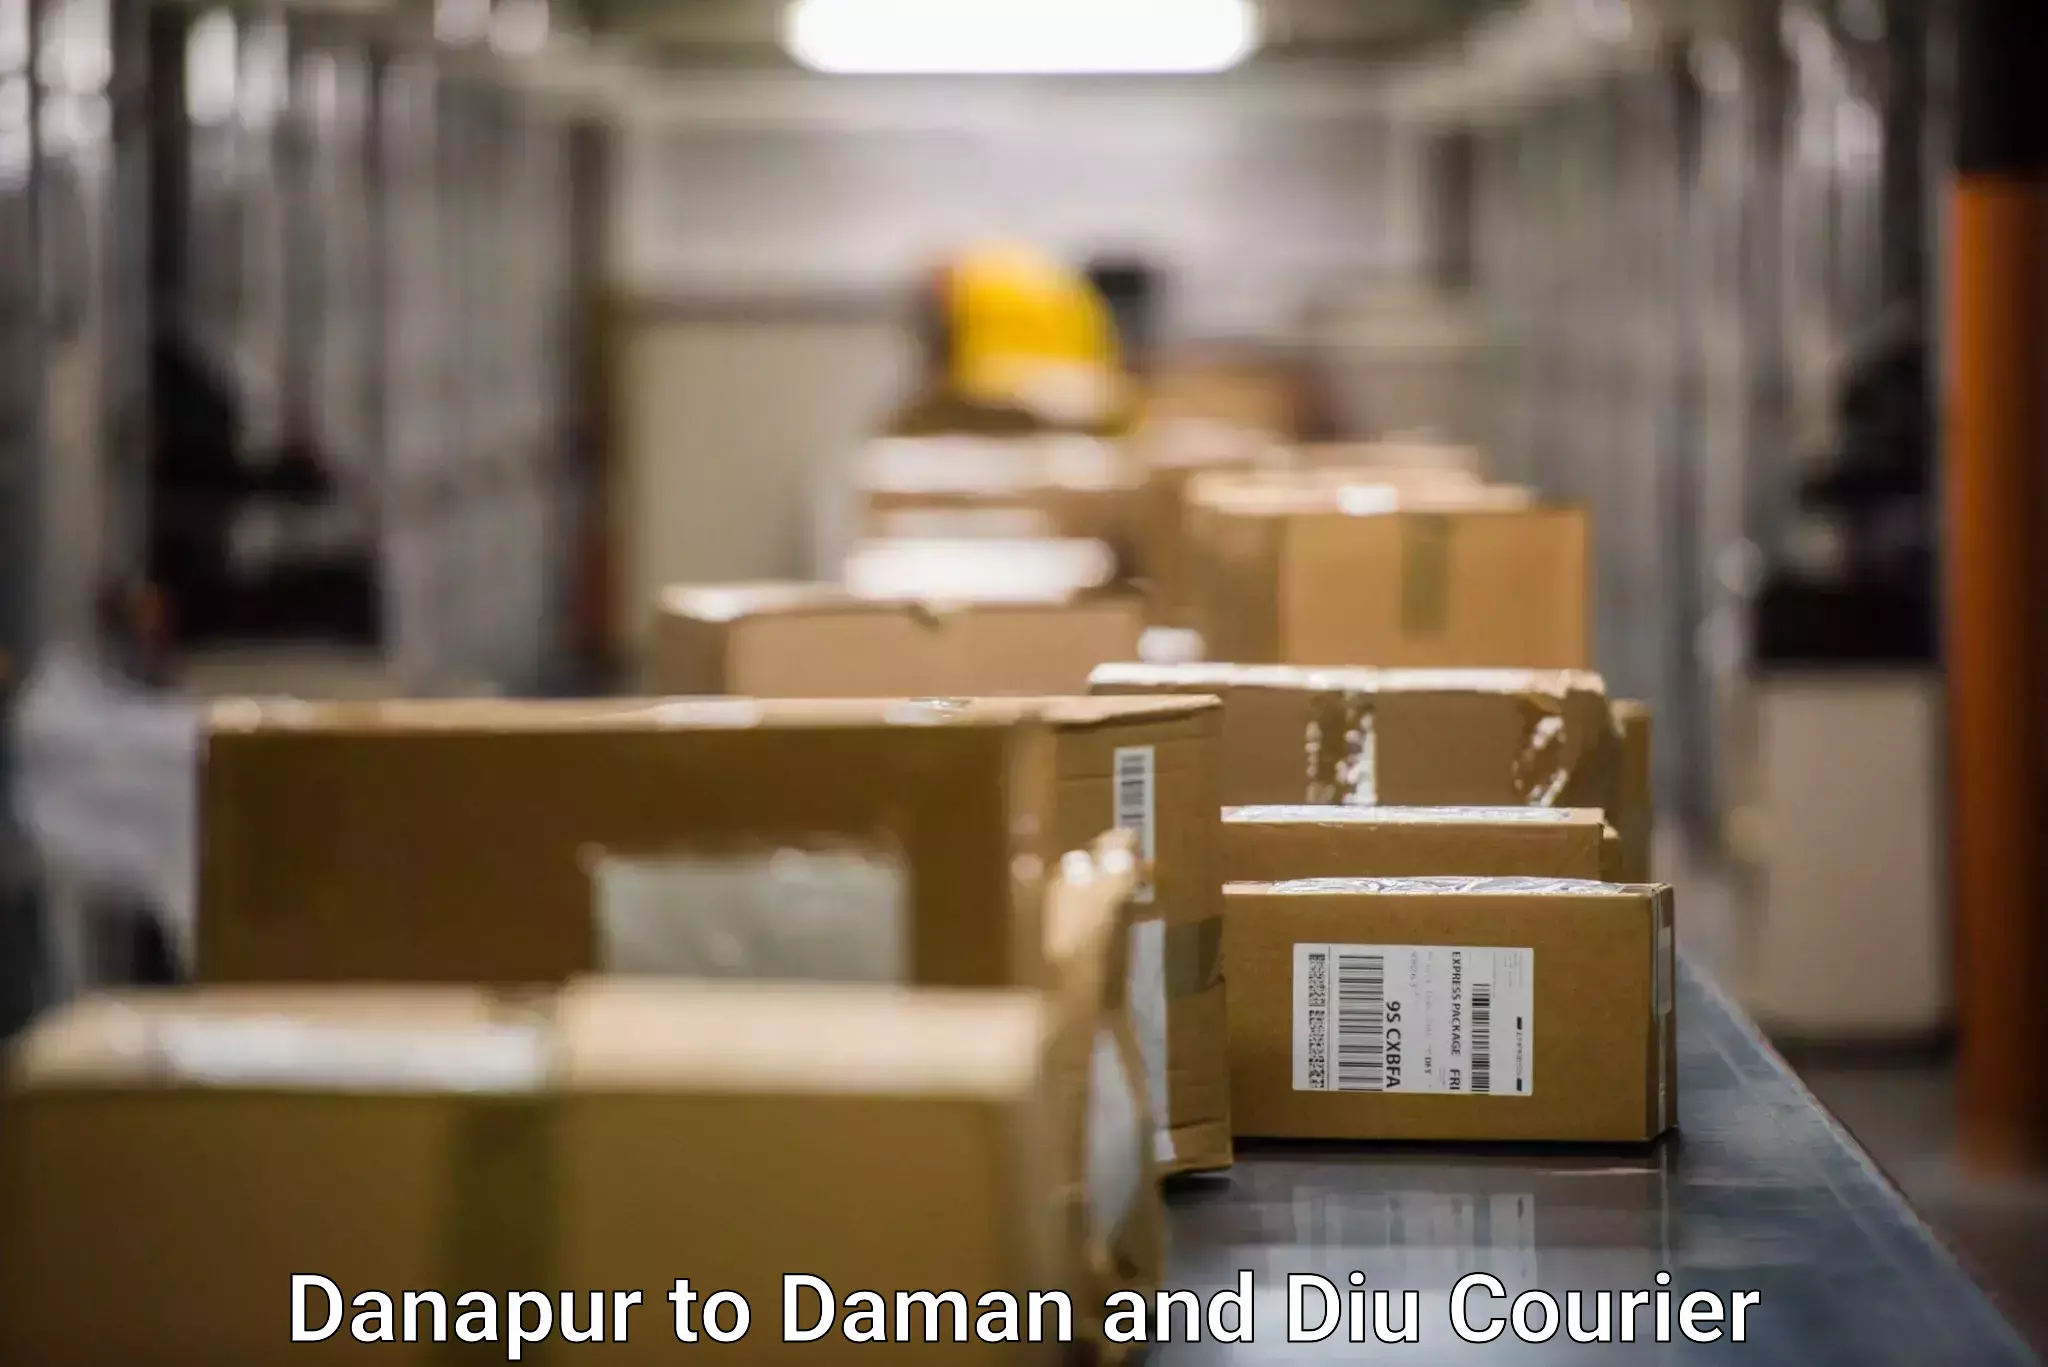 User-friendly delivery service Danapur to Daman